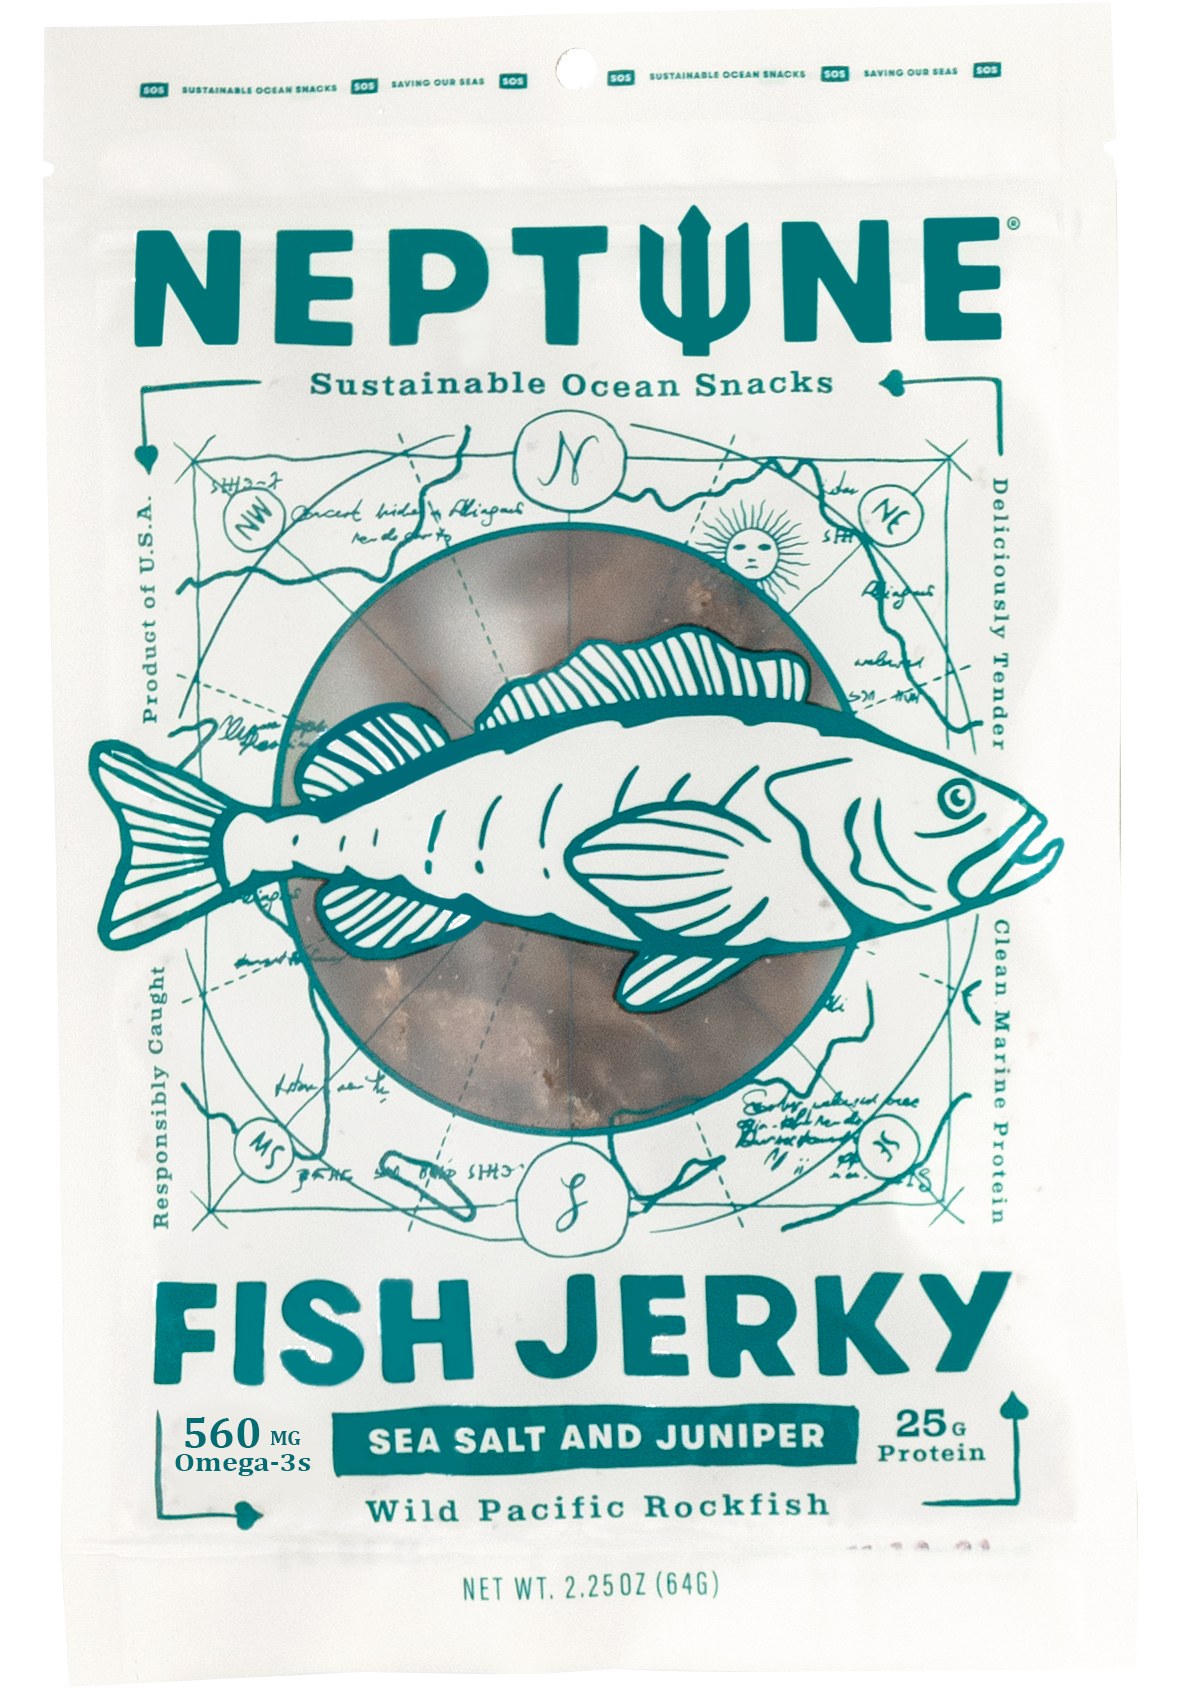 Sea Salt and Juniper Neptune Fish Jerky - Space Camp